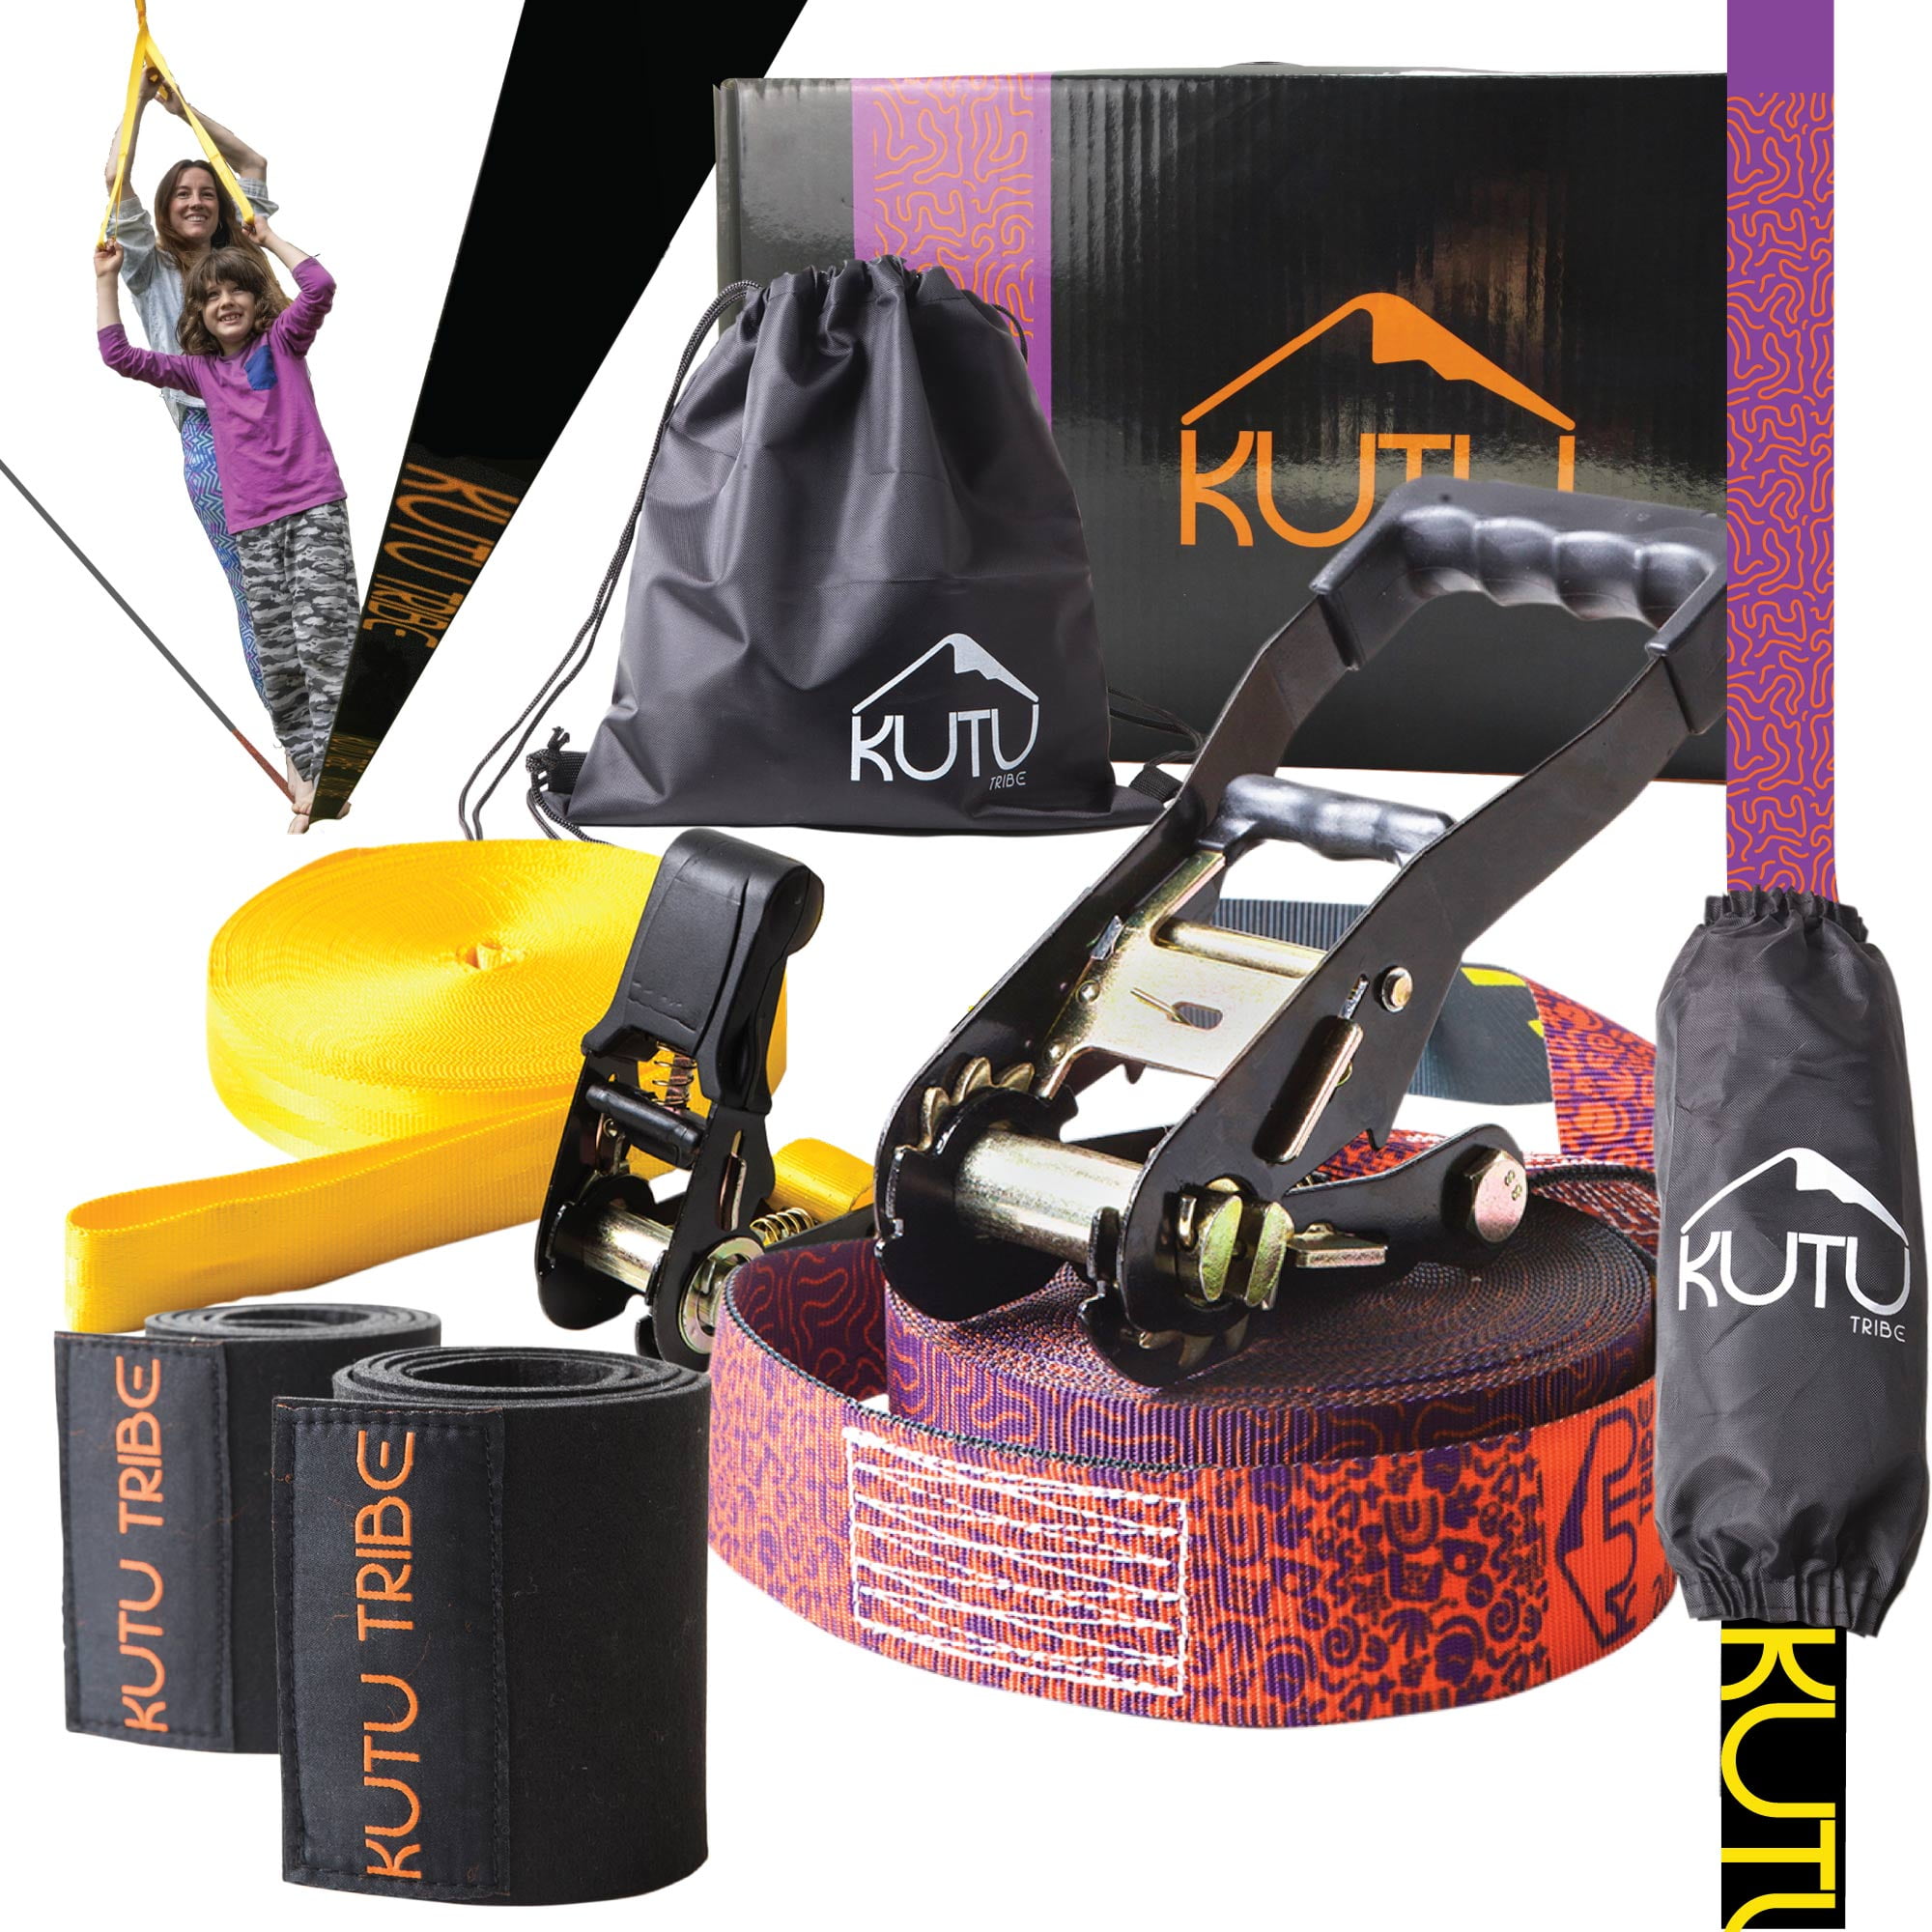 Kutu Tribe Fun Slackline Kit 60 feet Slack Line for Adults and Kids with  Training Line